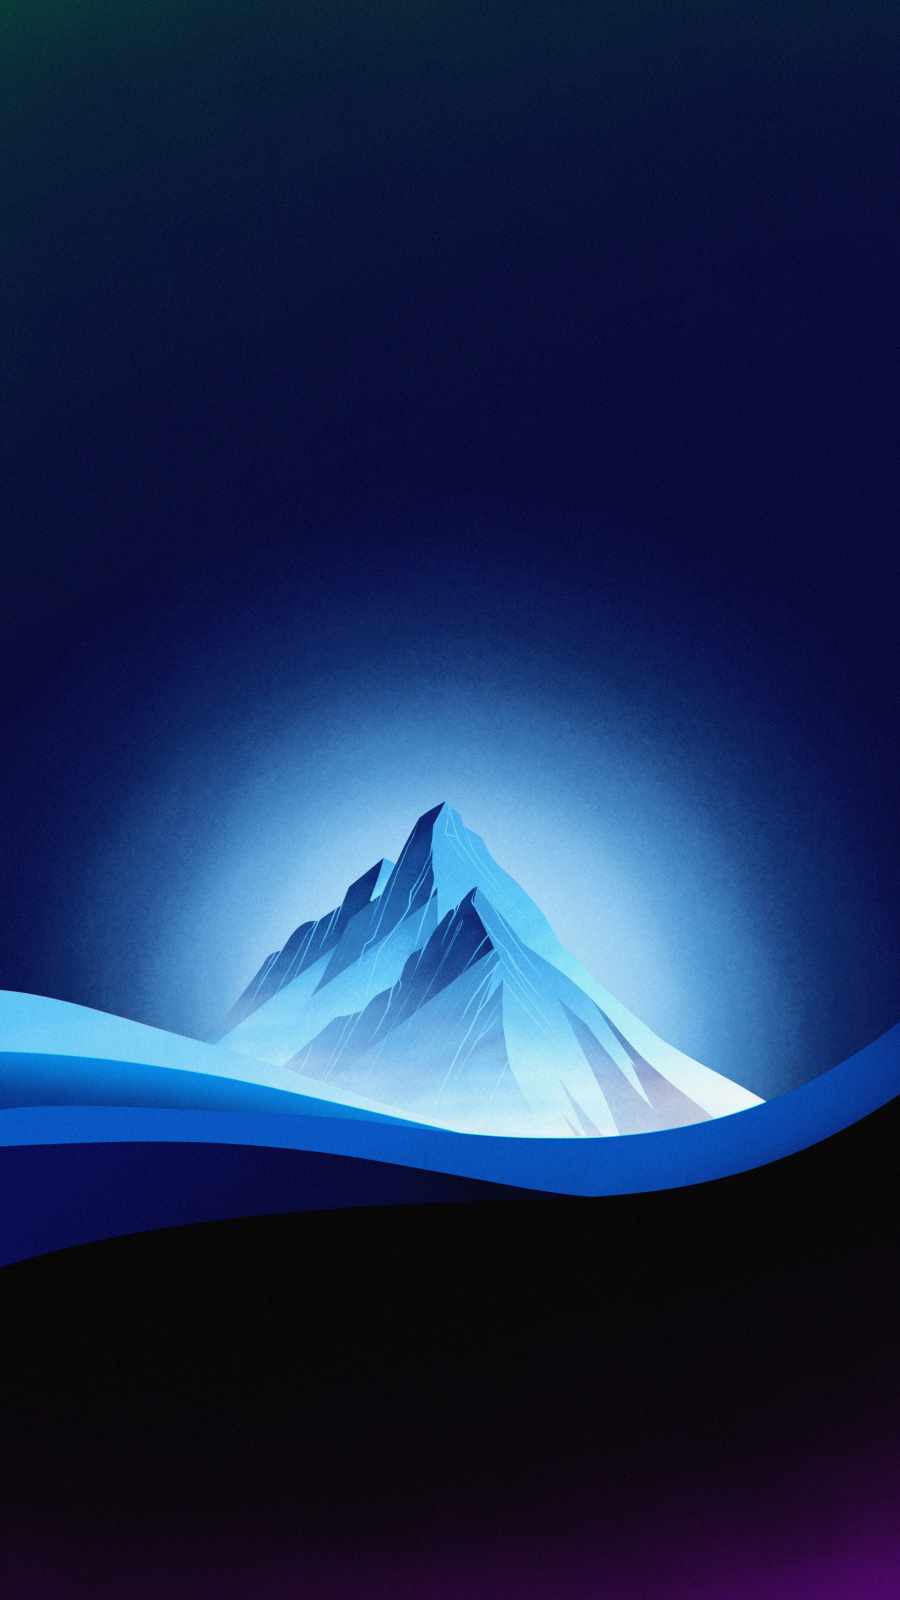 Snow Mountain Minimal Wallpaper, iPhone Wallpaper